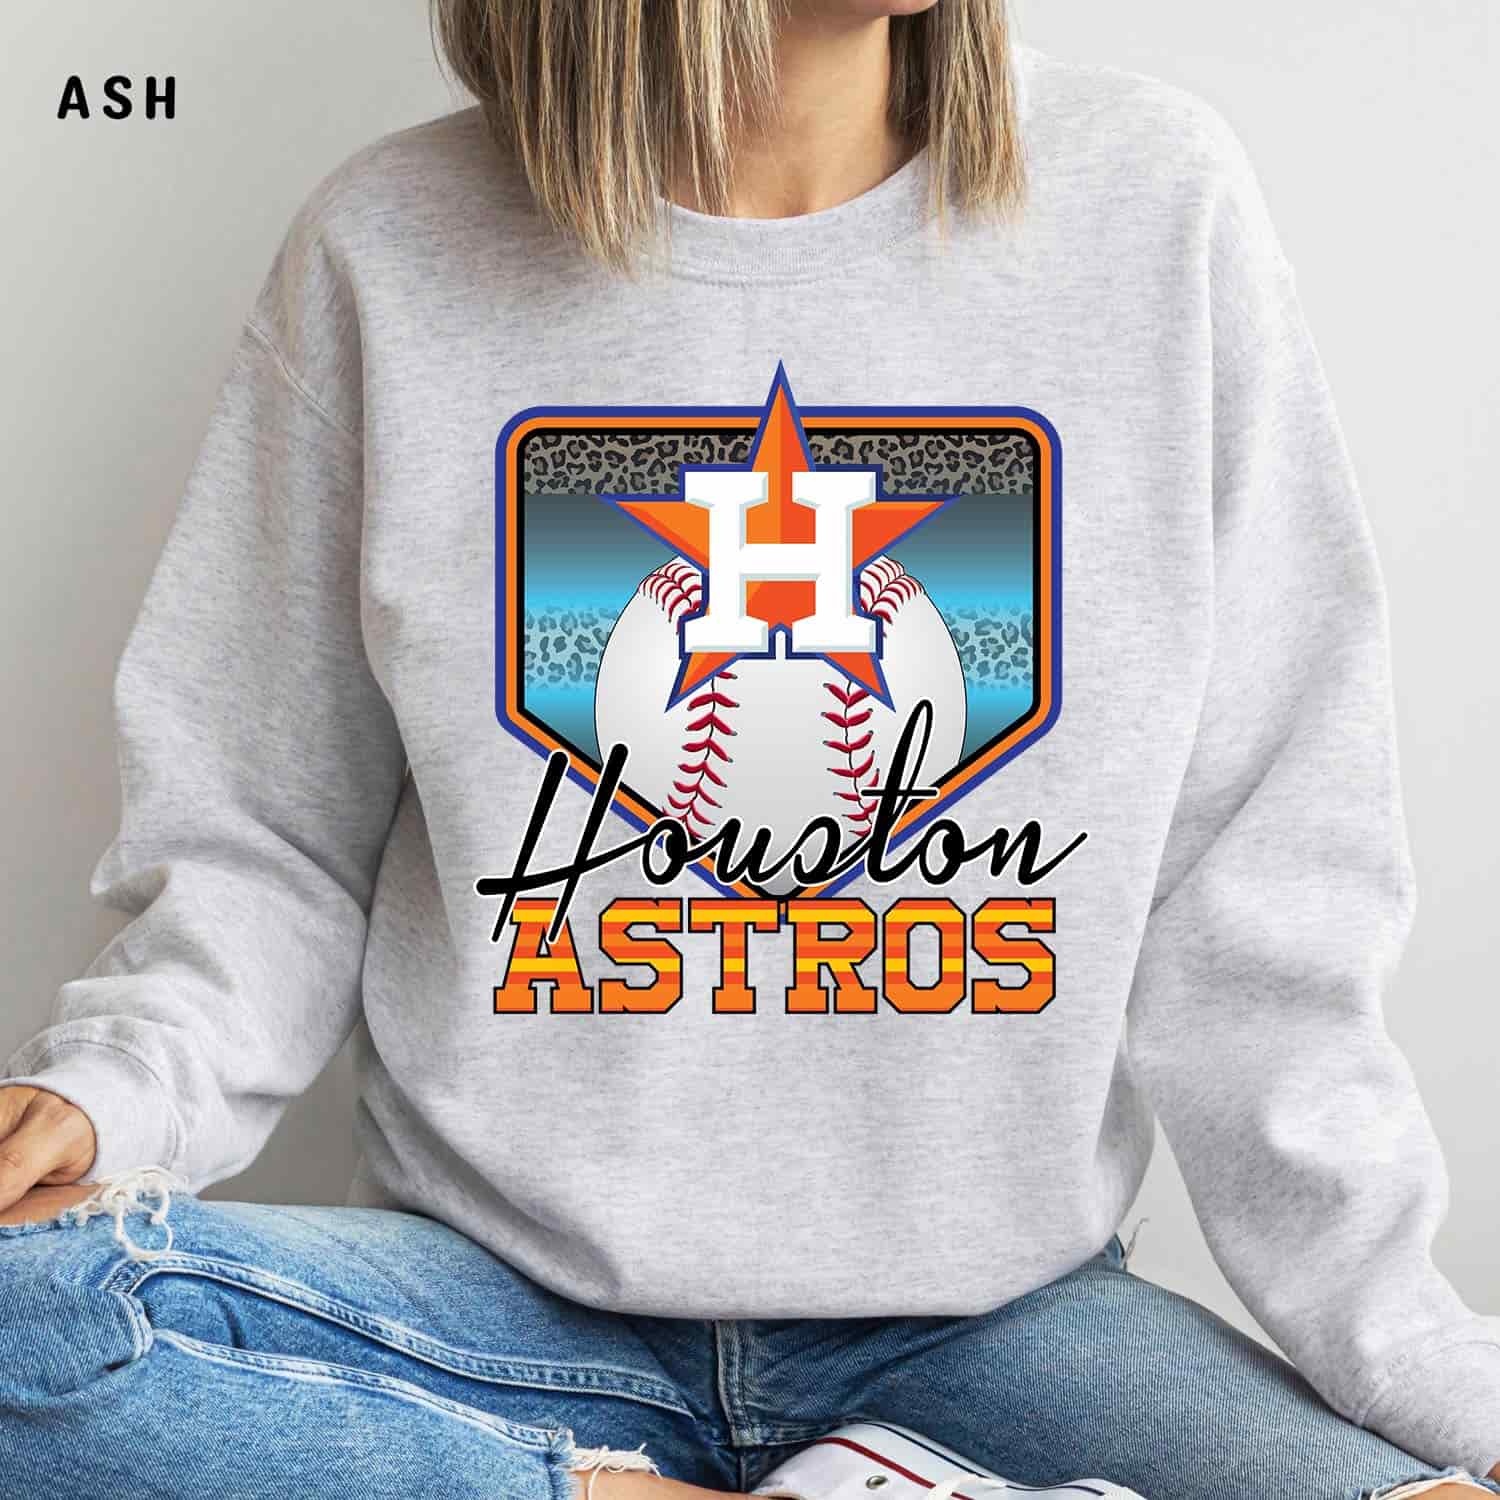 astros women's apparel